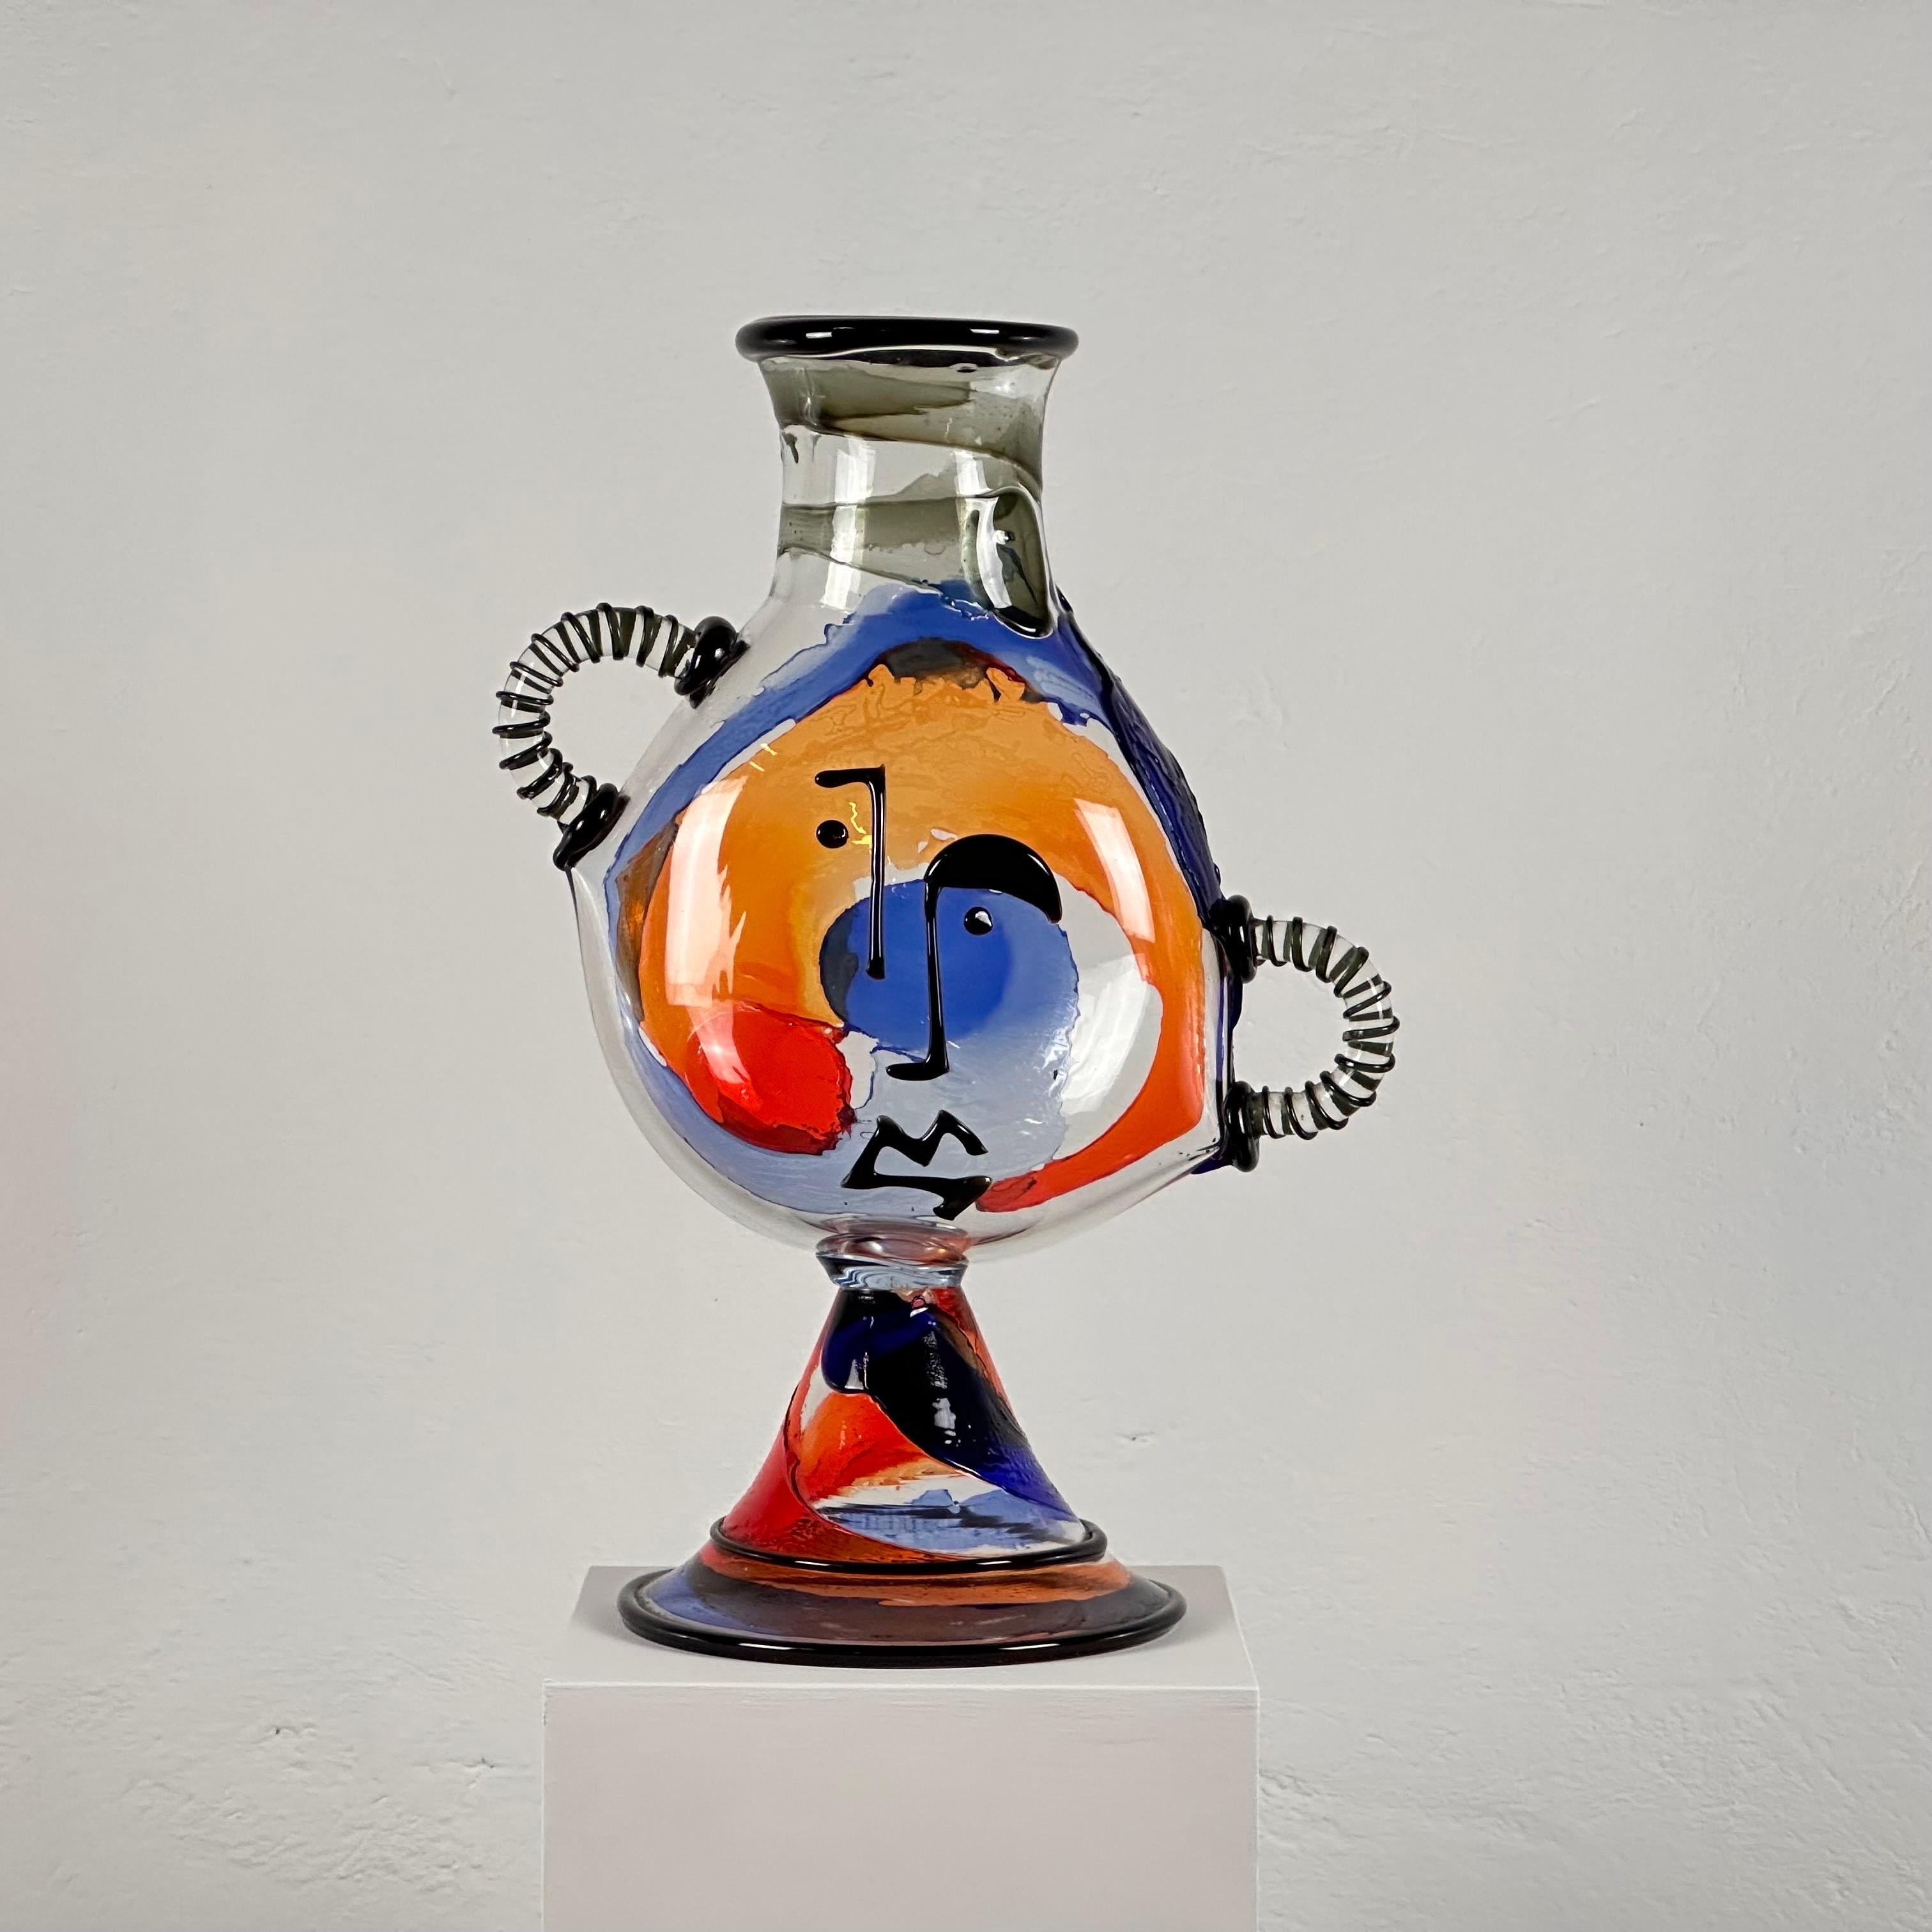 Mario Badioli Picasso's Face Vase in Murano Glass for Vetreria Artistica Badioli, 1990s

Discover a captivating piece of artistic brilliance with the Mario Badioli Picasso's Face Vase, an exquisite creation hailing from the renowned Vetreria